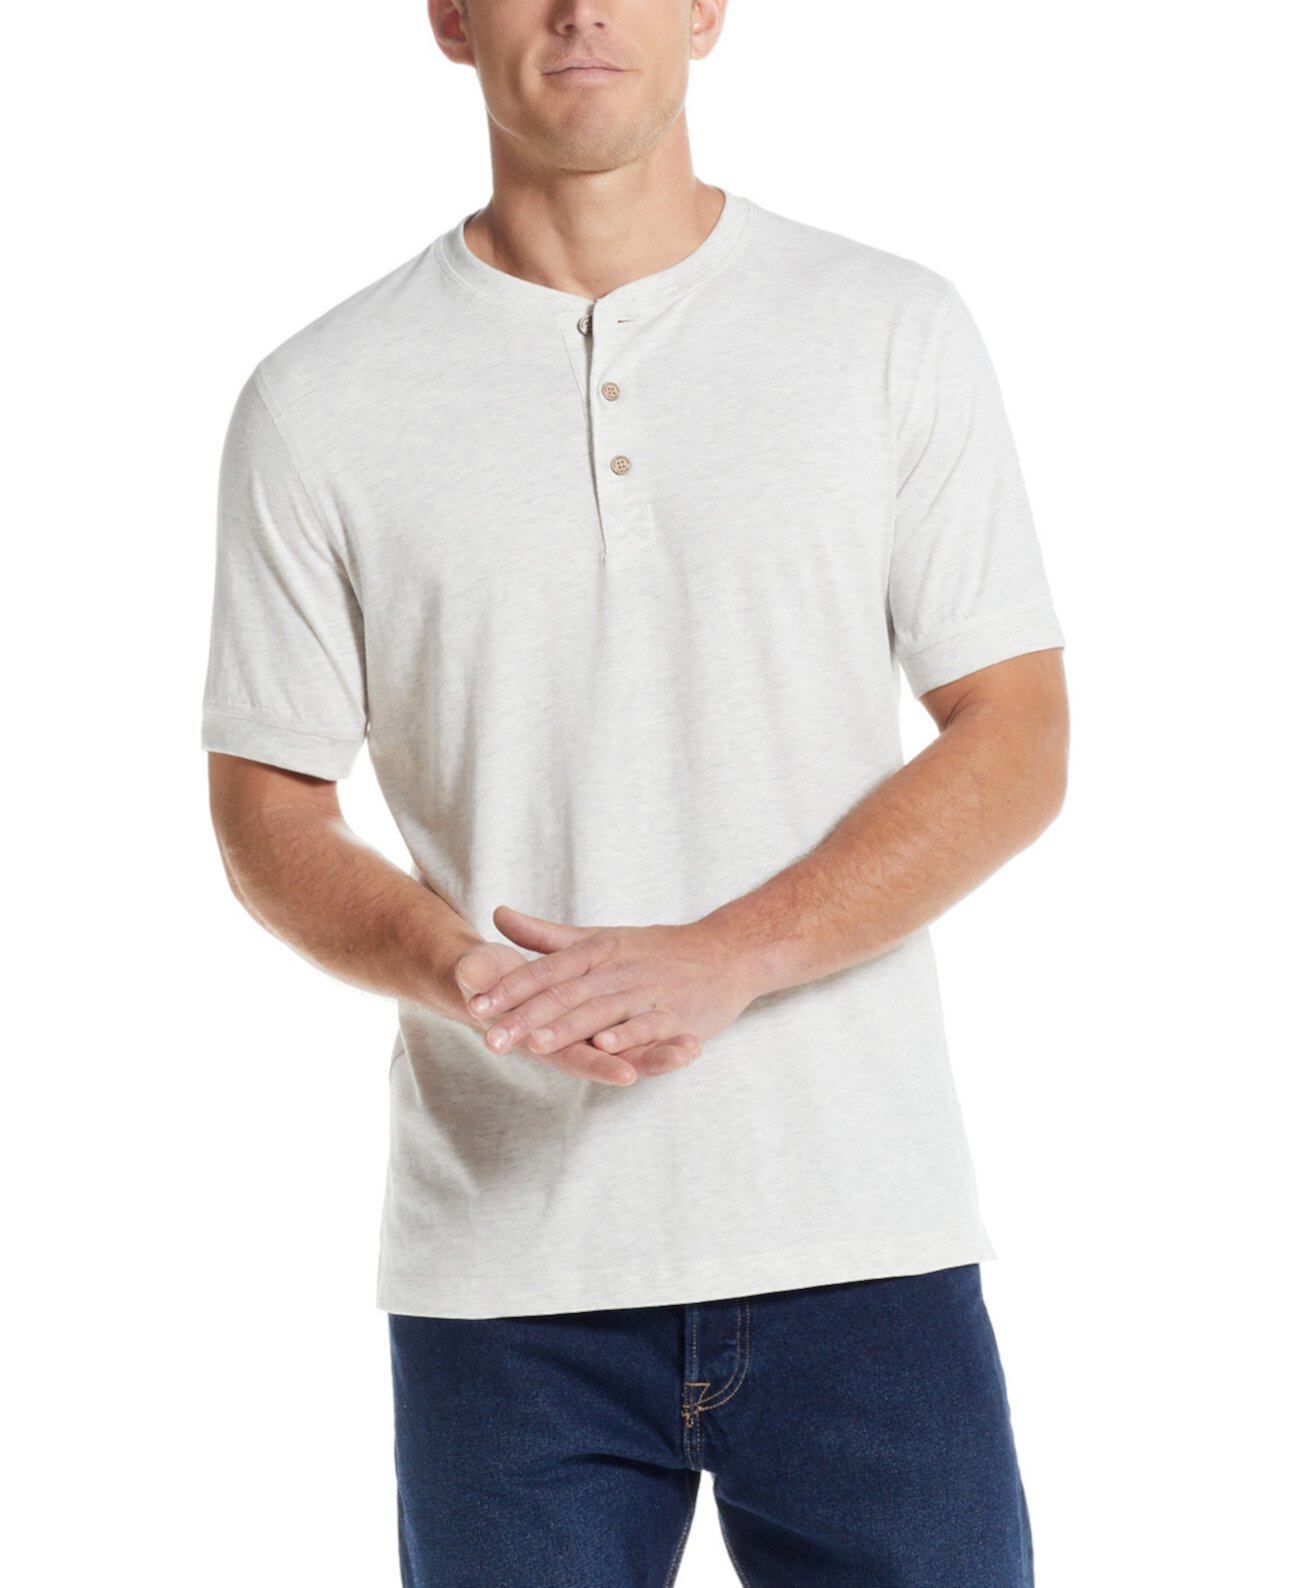 Мужская меланжевая футболка Henley с коротким рукавом Weatherproof Vintage